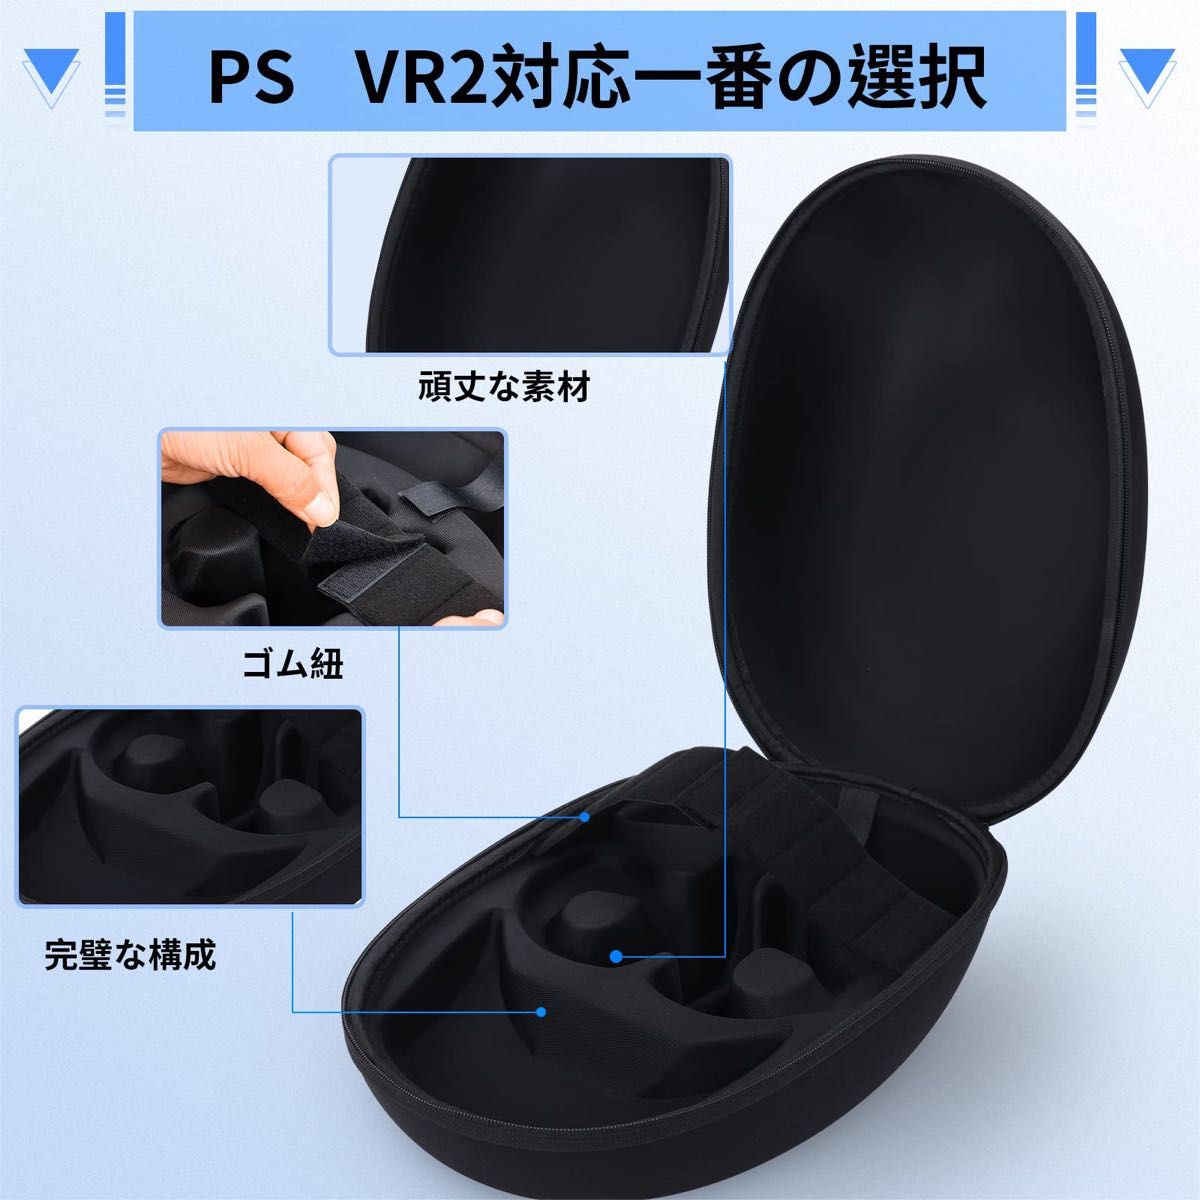 For PS VR2 収納バッグ 保護カバー キャリングバッグ 収納ケース 収納 軽い